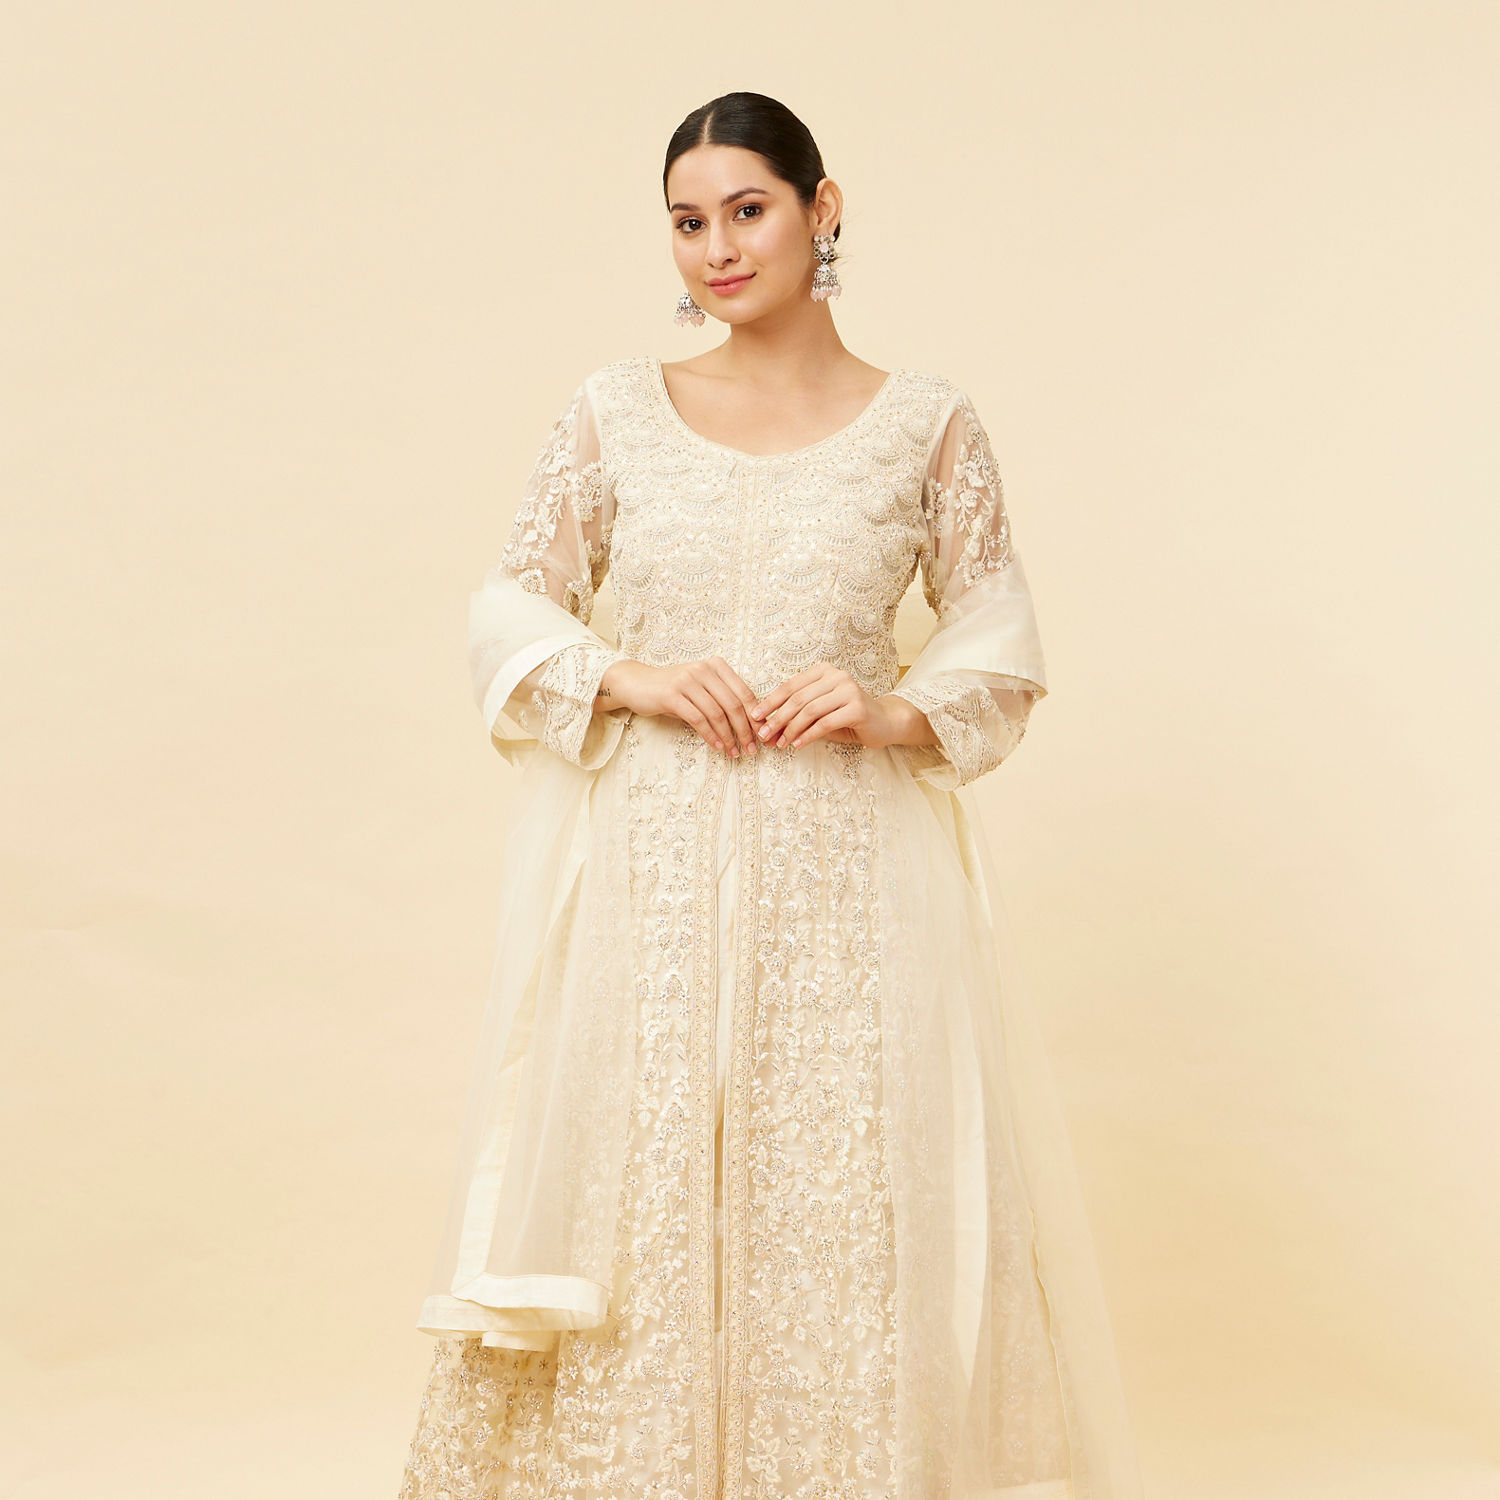 Shop Indo-western Dresses for Women Online @AndaazFashion.com